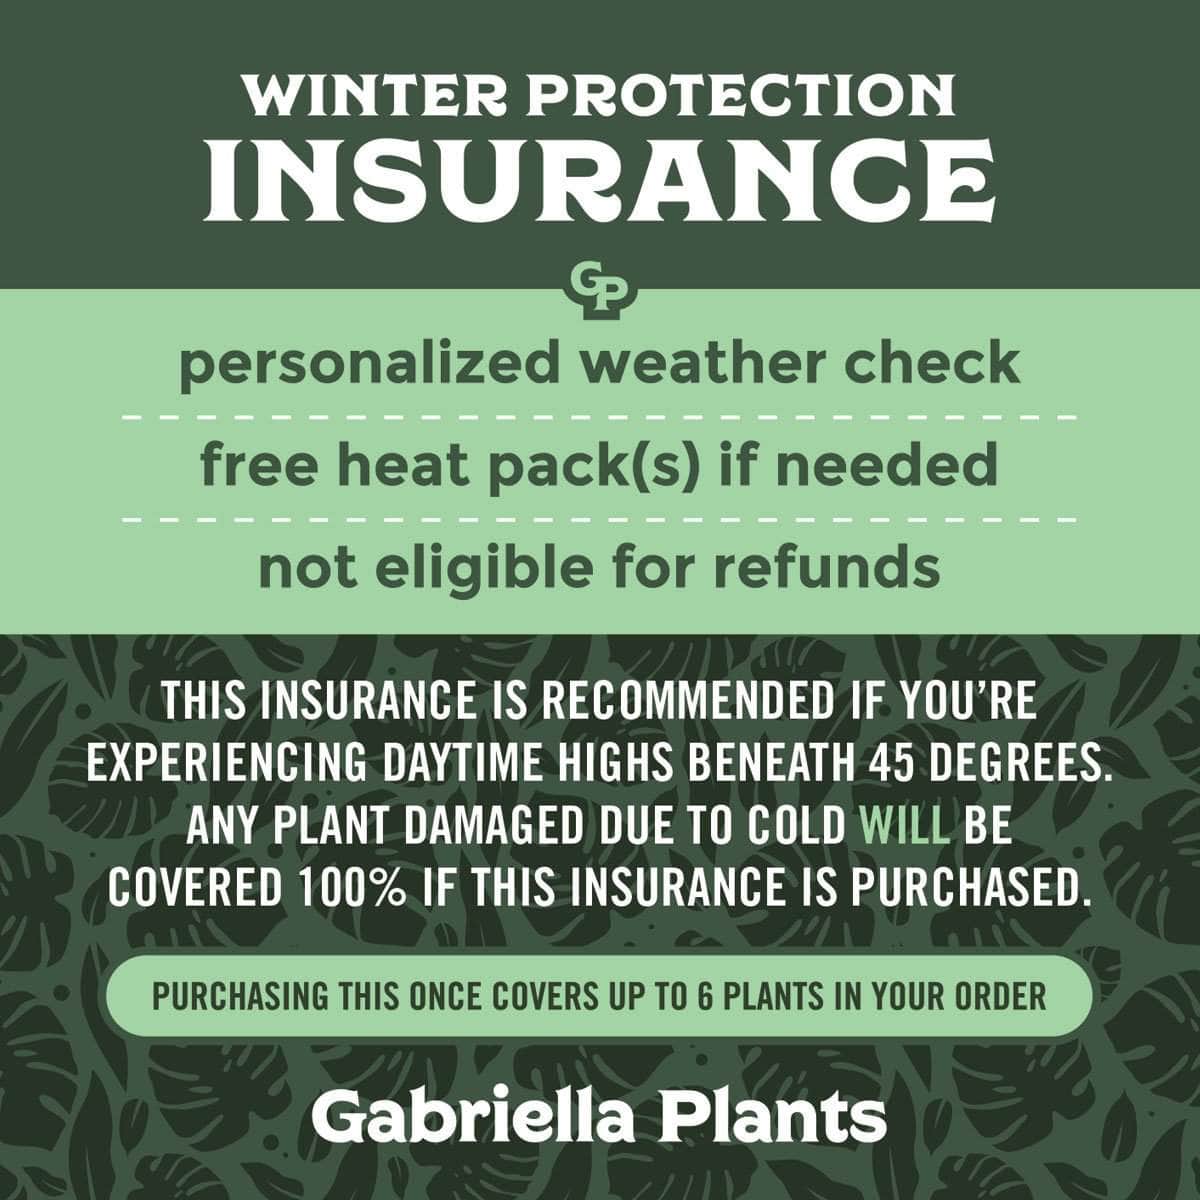 Gabriella Plants Insurance Winter Protection Insurance